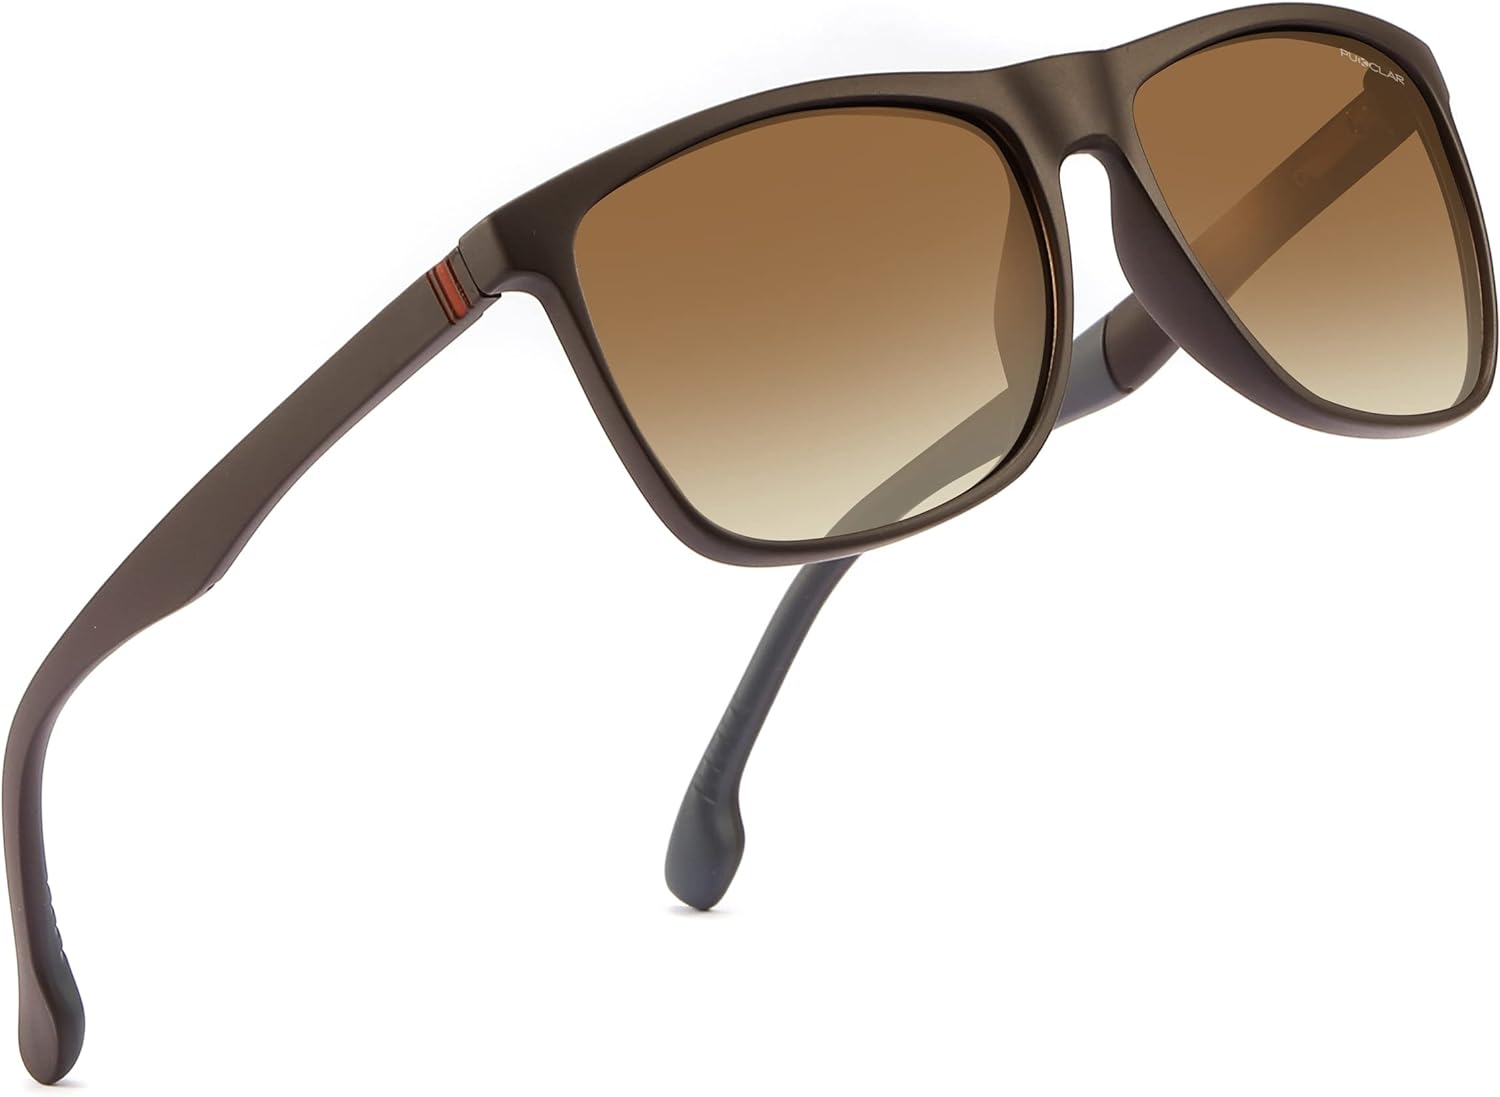 PUKCLAR Sunglasses for Men Polarized Lightweight TR90 Frame UV400 Spring Hinges Sunglasses,Please identify PUKCLAR